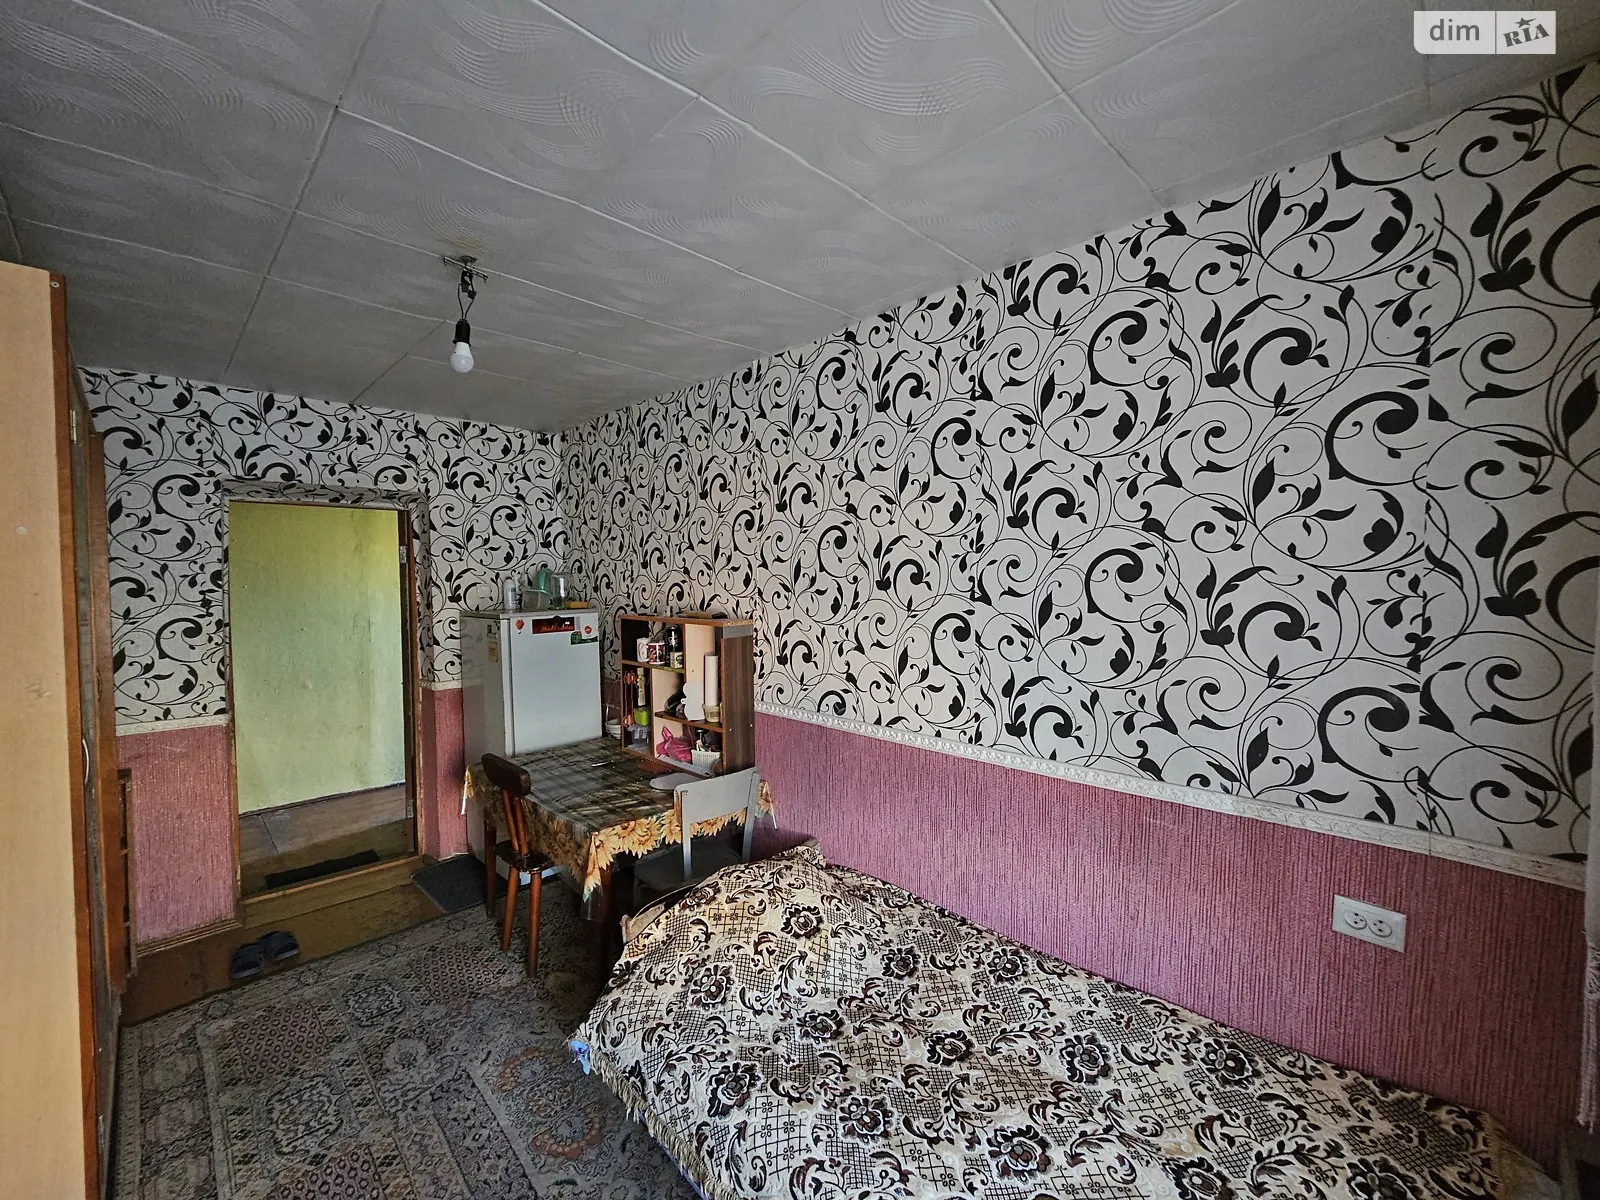 Продается комната 17.4 кв. м в Виннице, цена: 15500 $ - фото 1